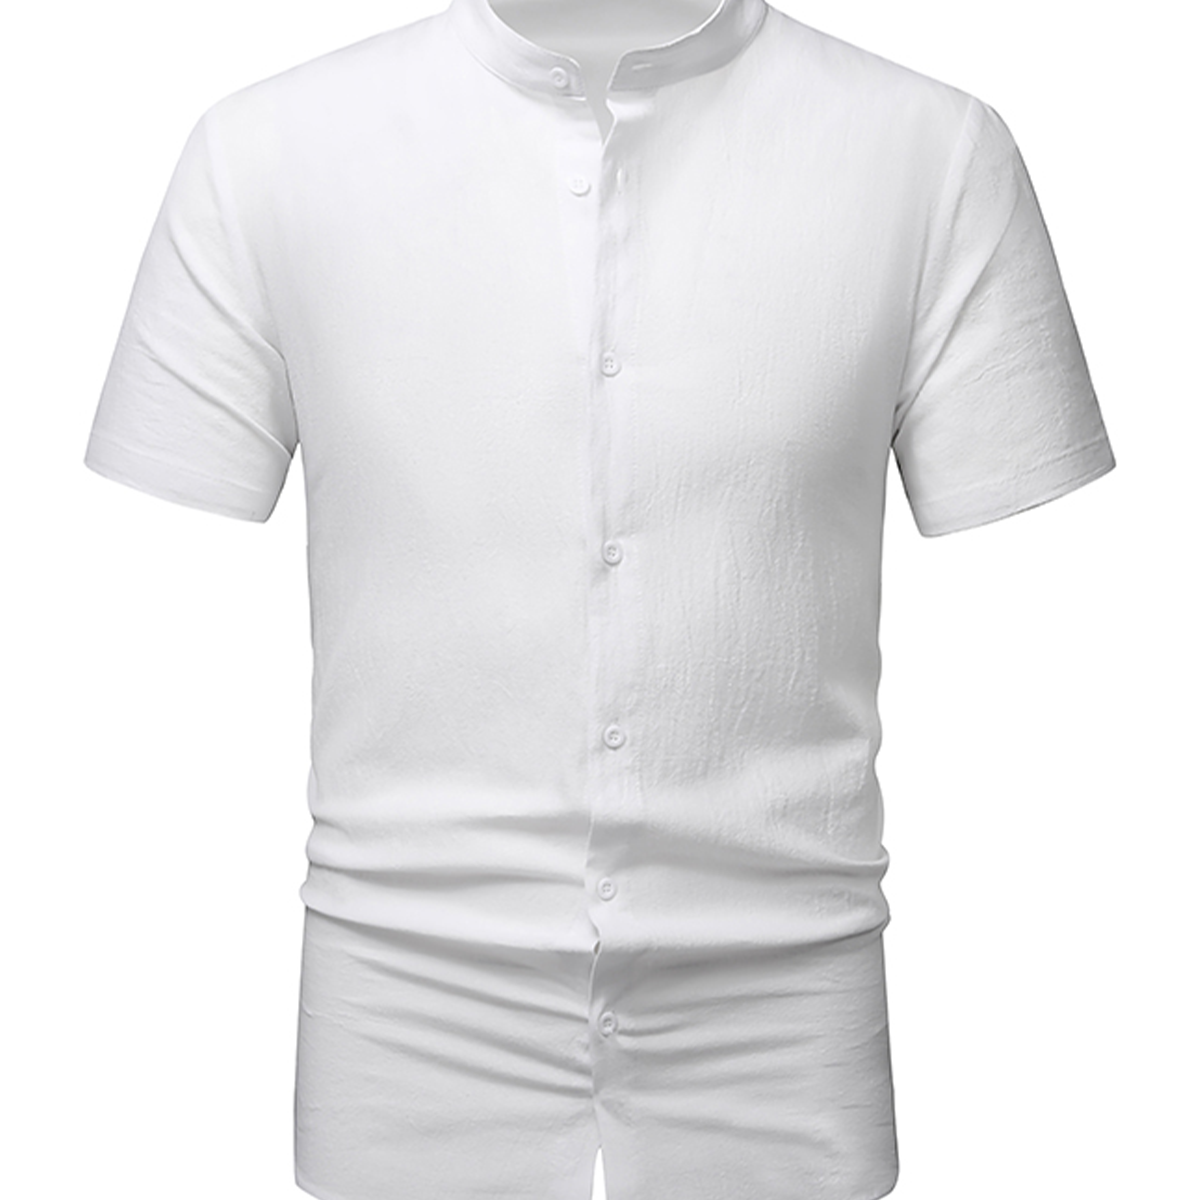 Men's Casual Summer Beach Solid Color Cotton Short Sleeve Shirt